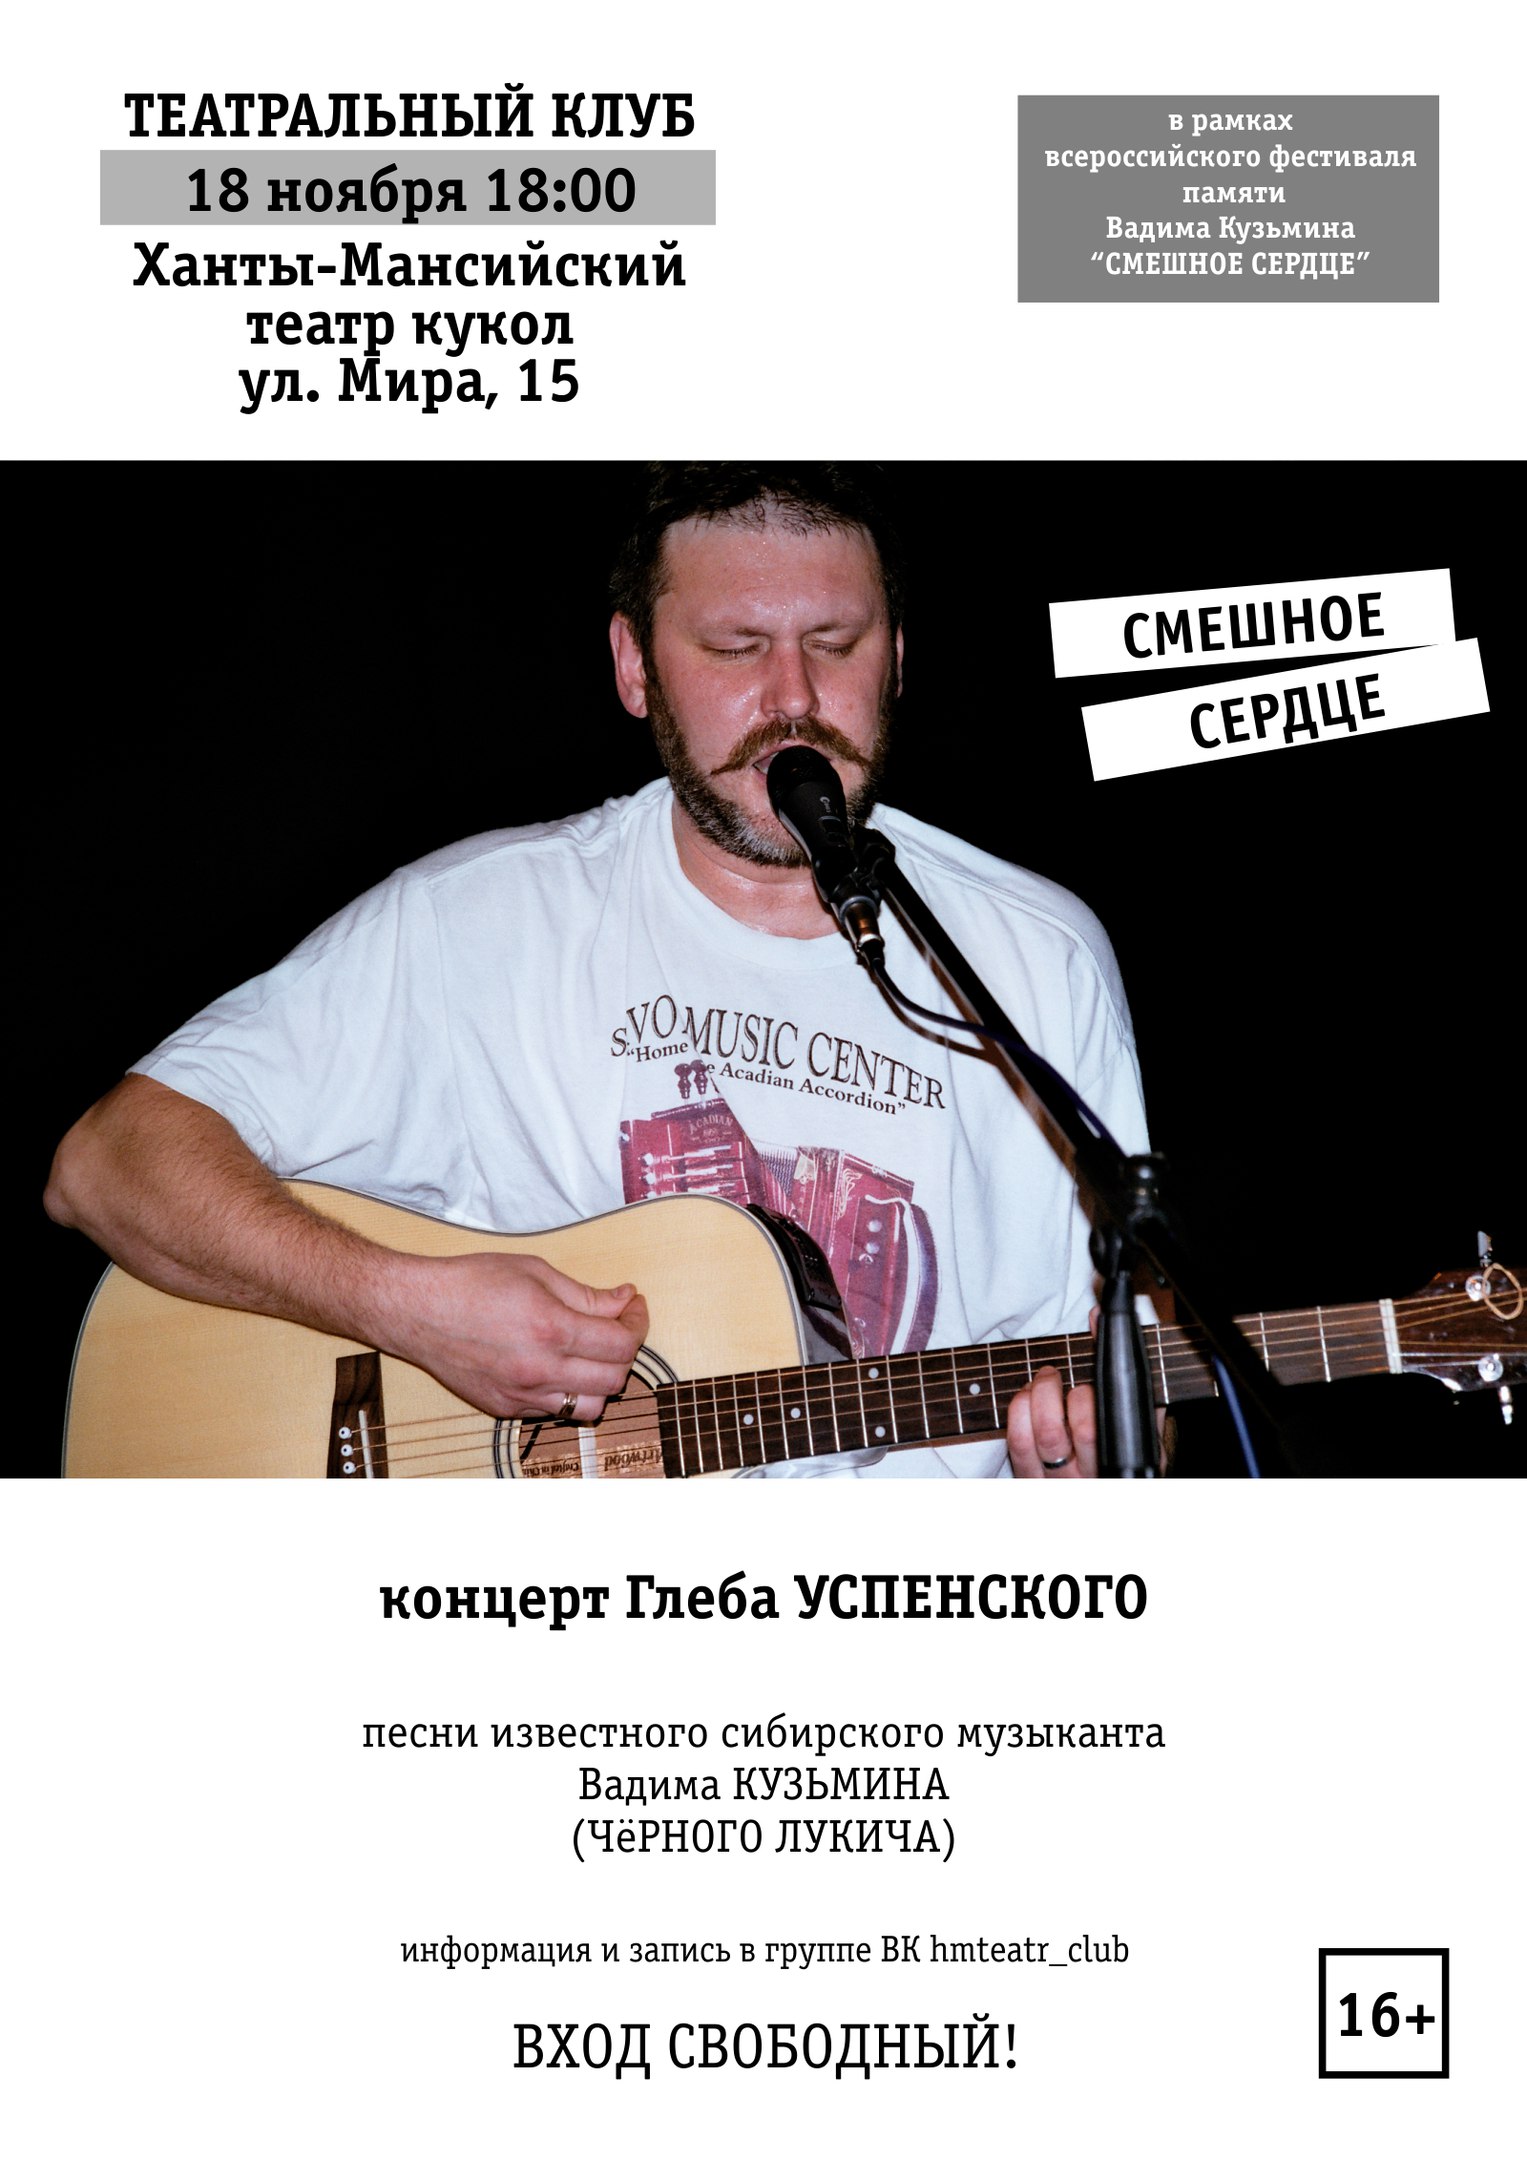 Концерт памяти сибирского музыканта Вадима Кузьмина организуют в Ханты-Мансийске